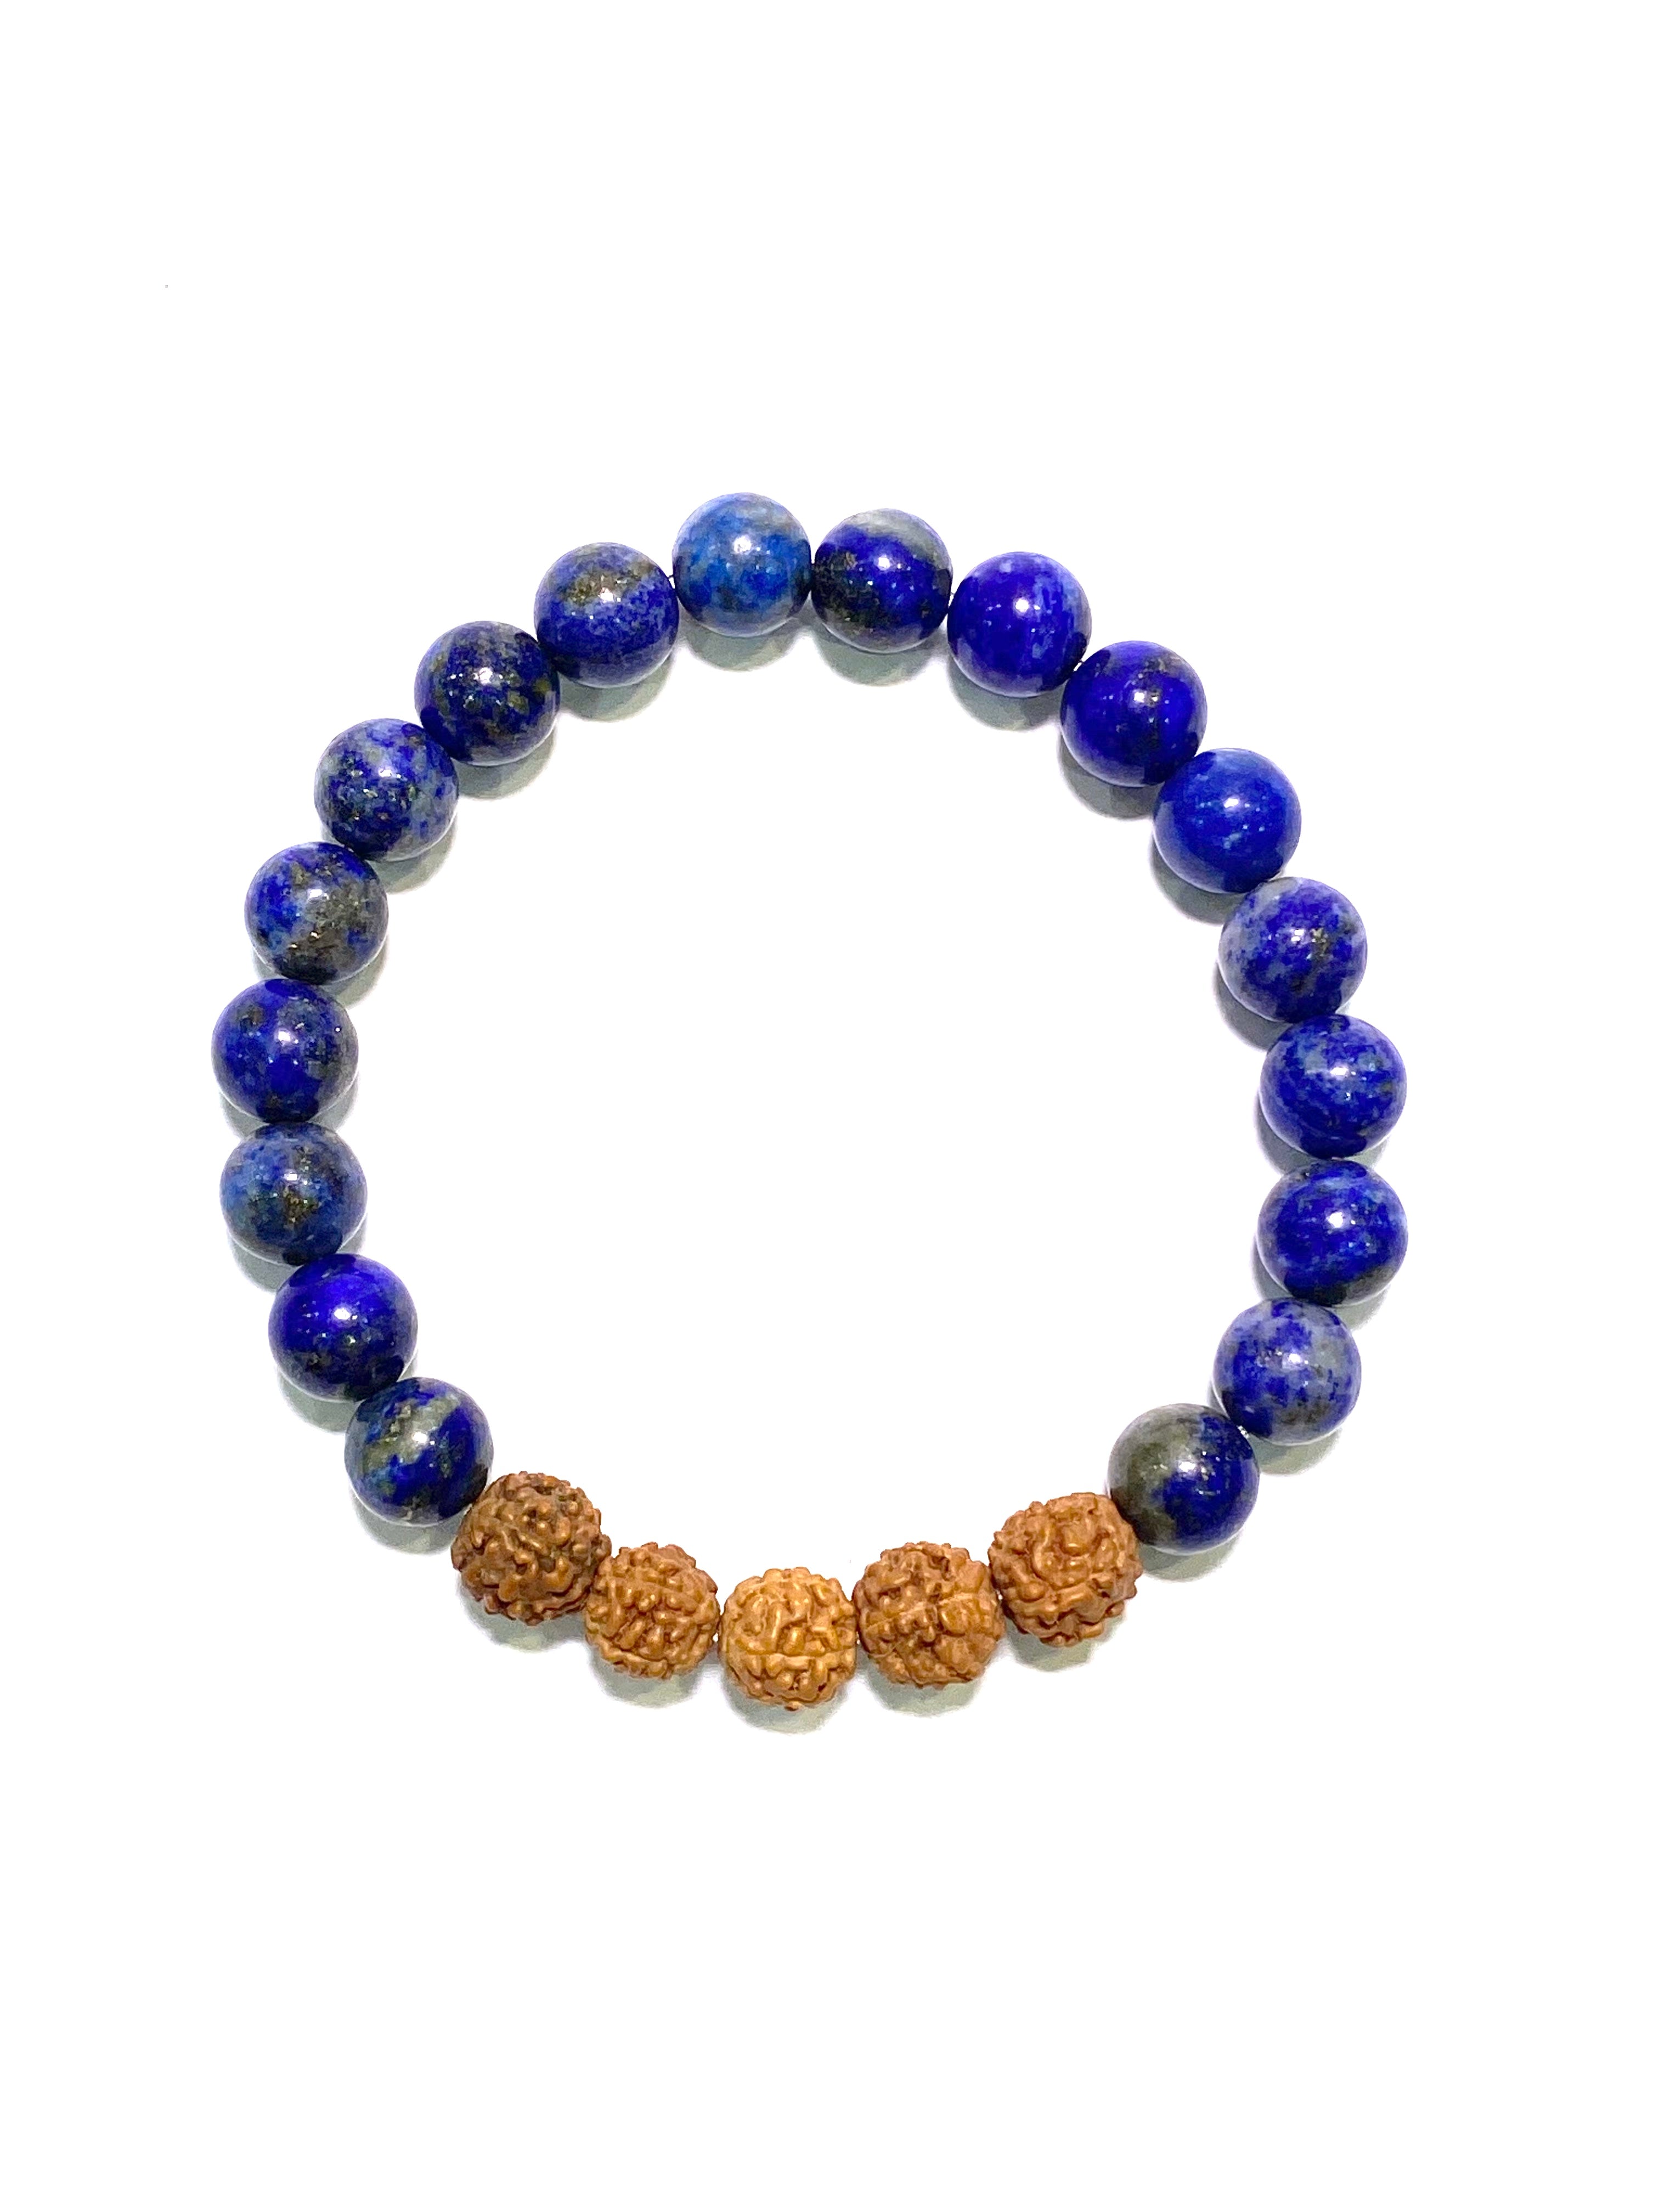 Beautiful Blue Lapis Lazuli Prayer Mala - Natural 108 Beads Necklace